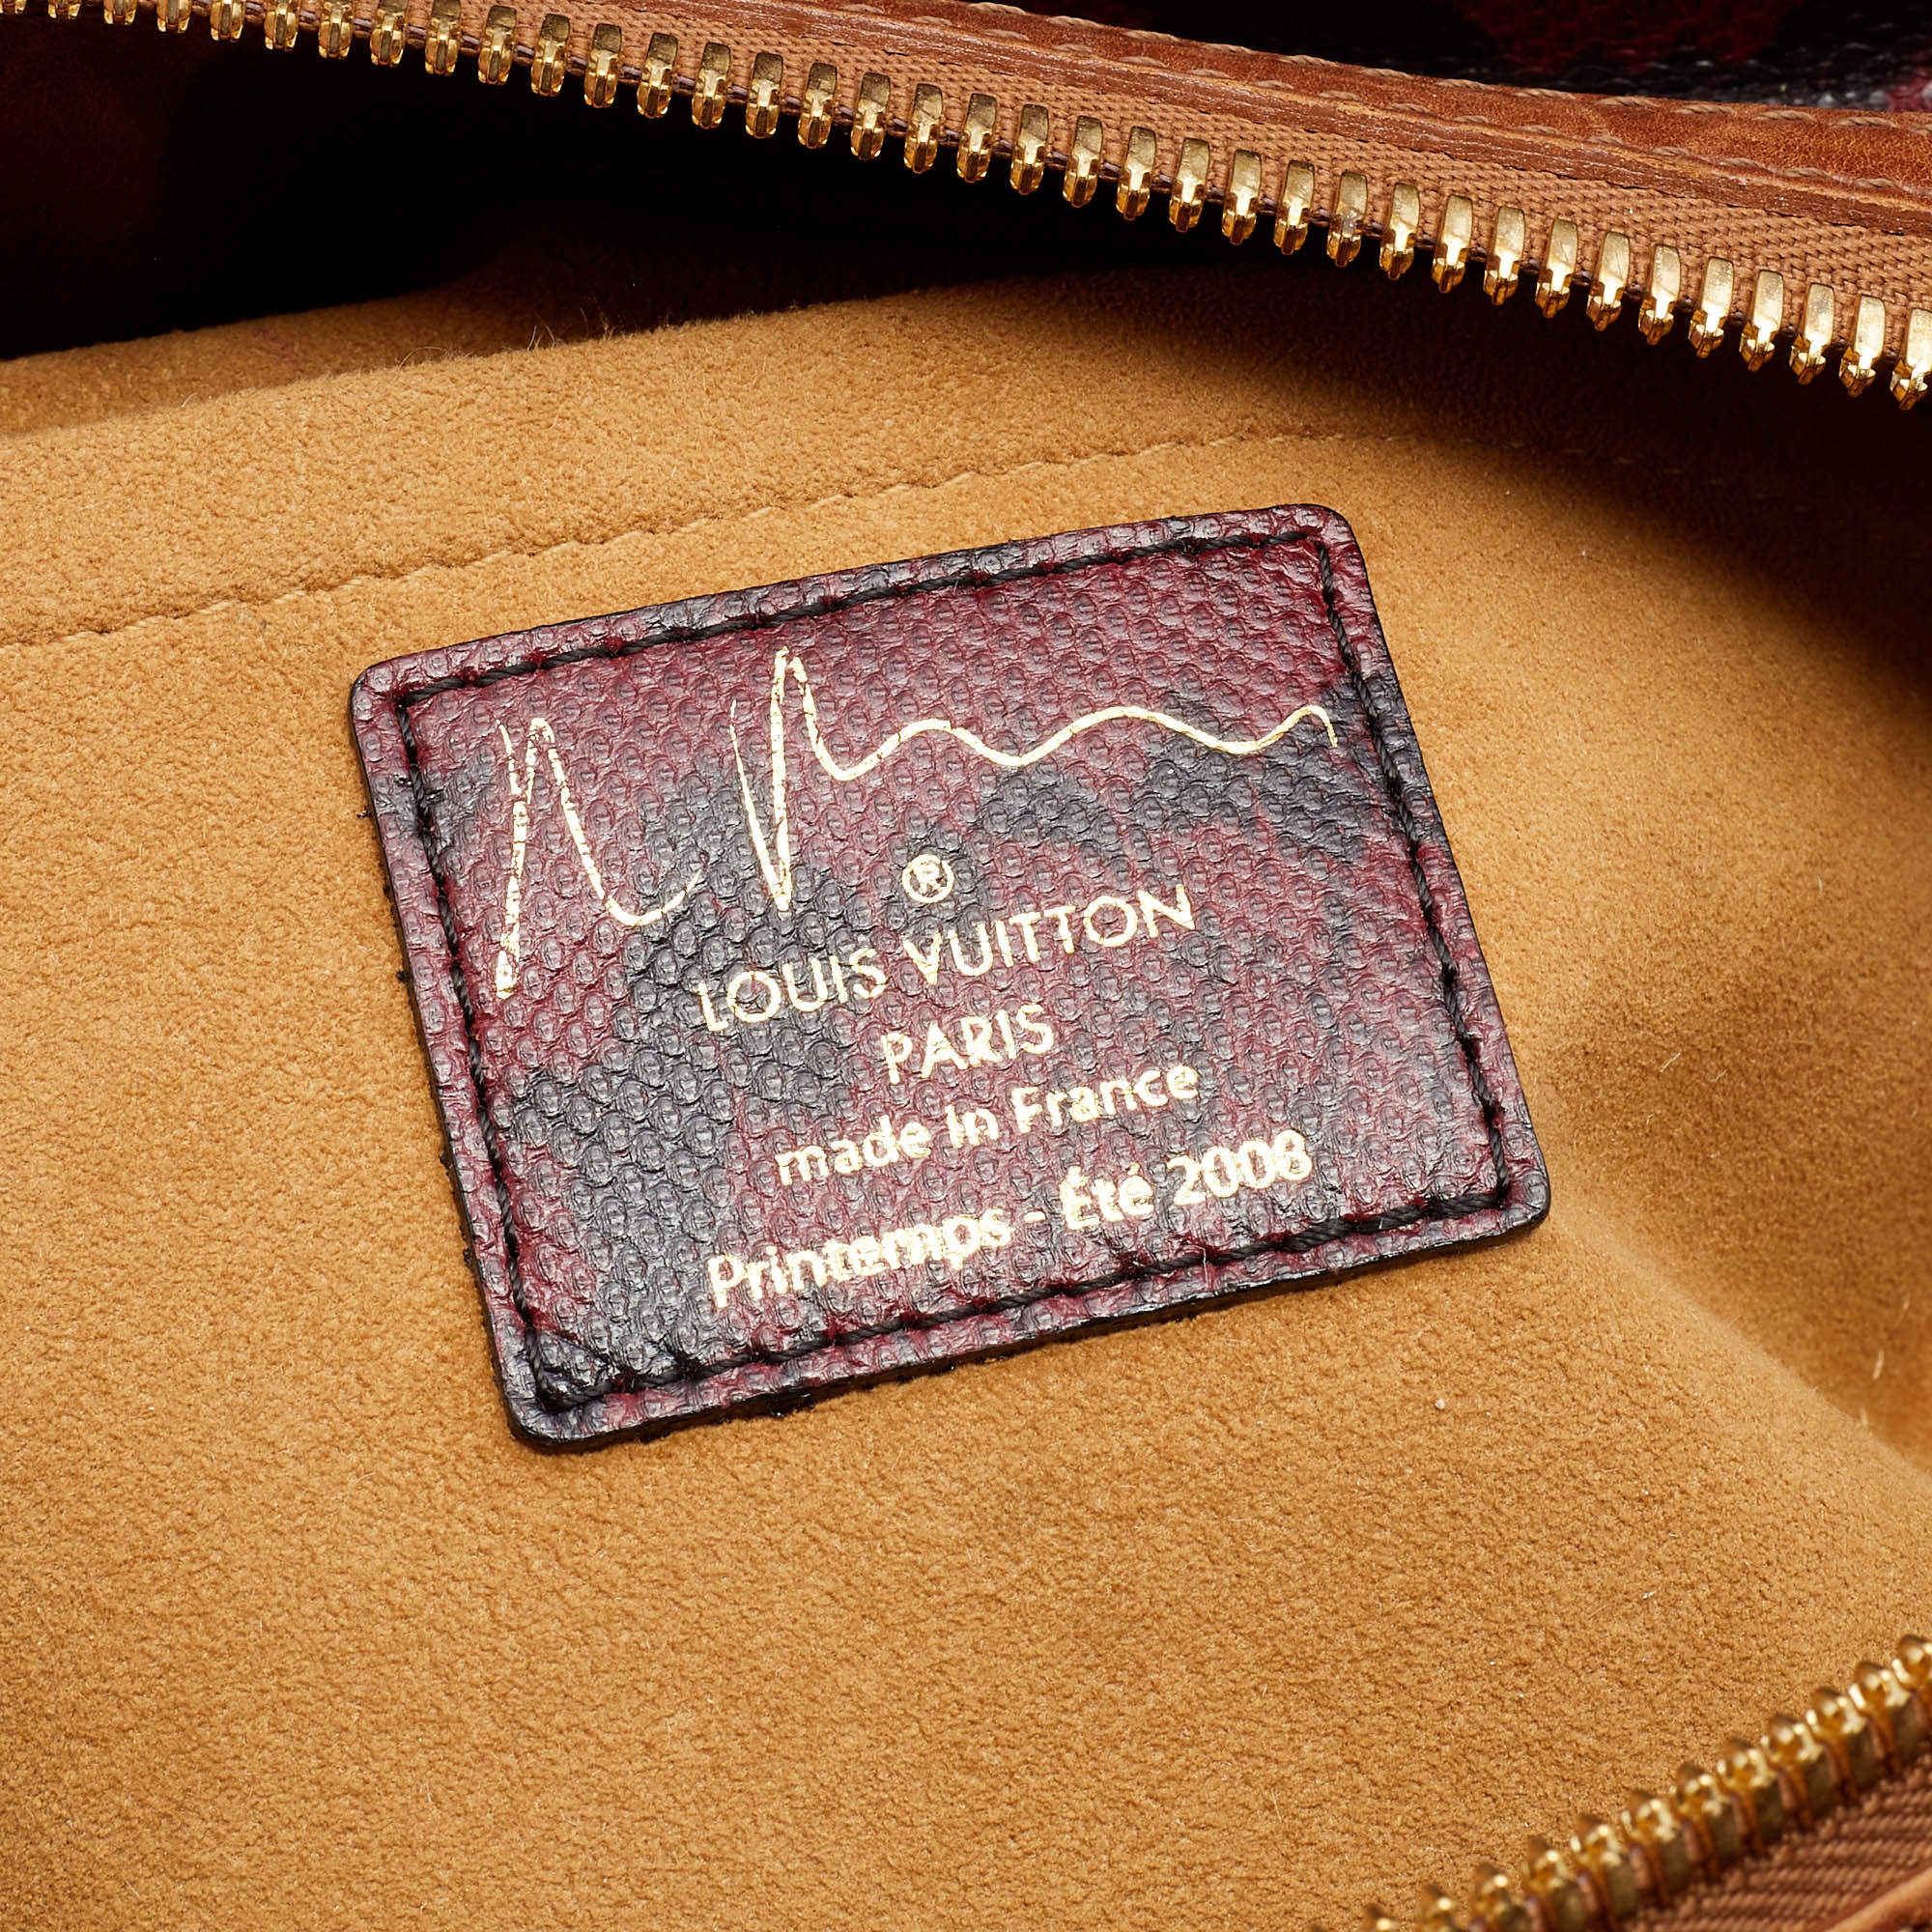 Louis Vuitton x Richard Prince Karung-Trimmed Graduate Jokes Bag